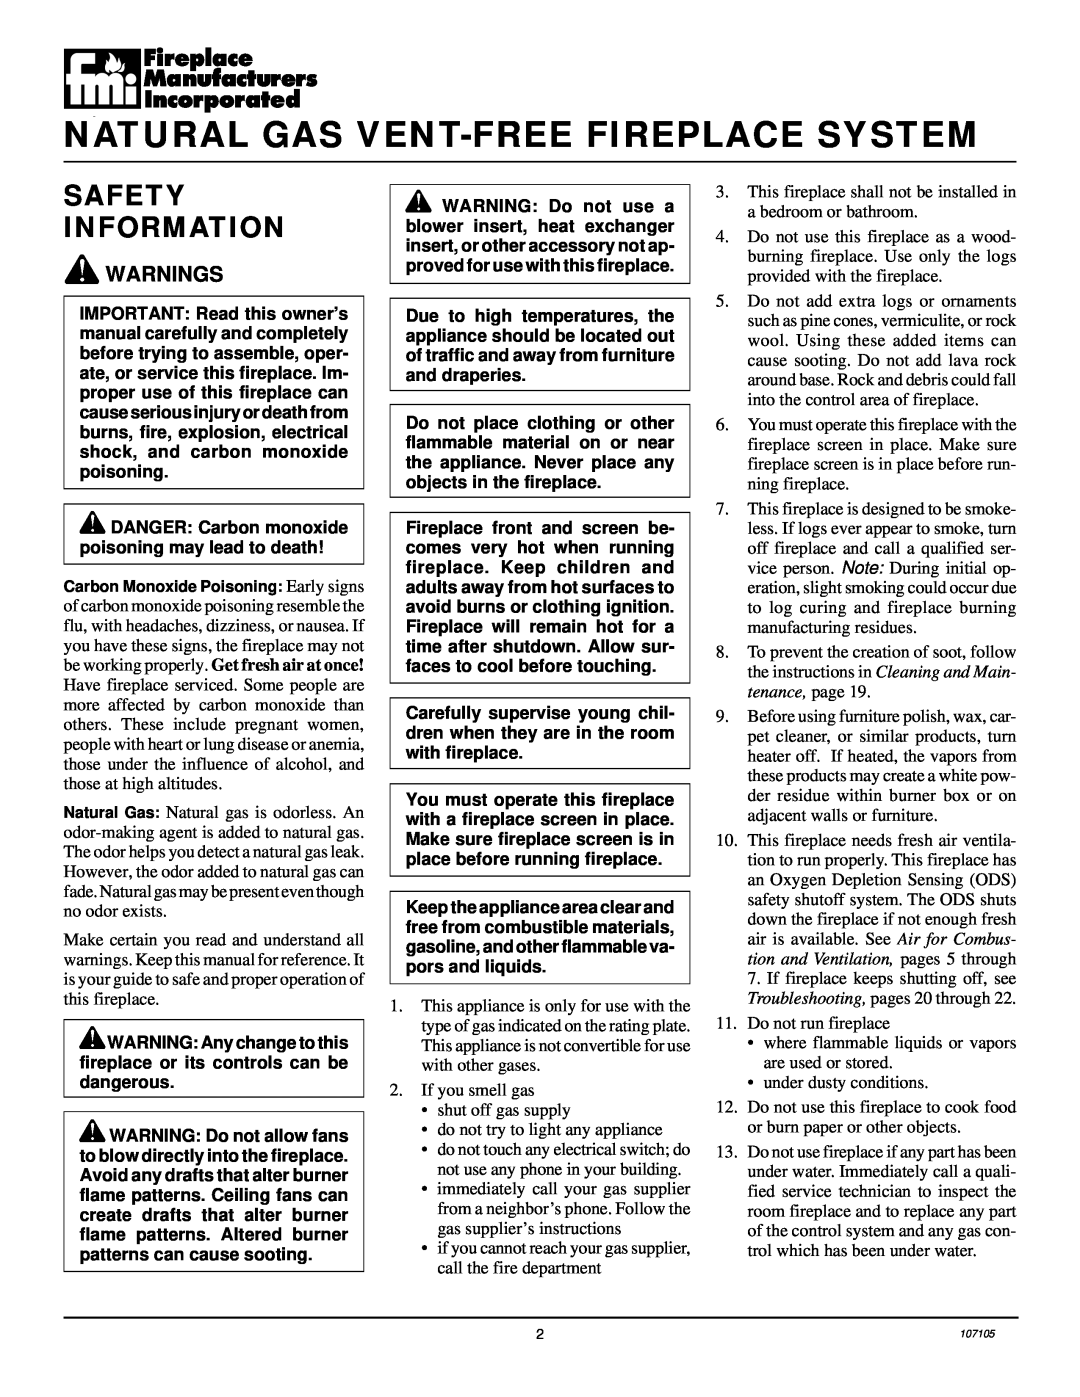 Desa FMH26TN 14 installation manual Natural Gas Vent-Freefireplace System, Safety Information, Warnings 